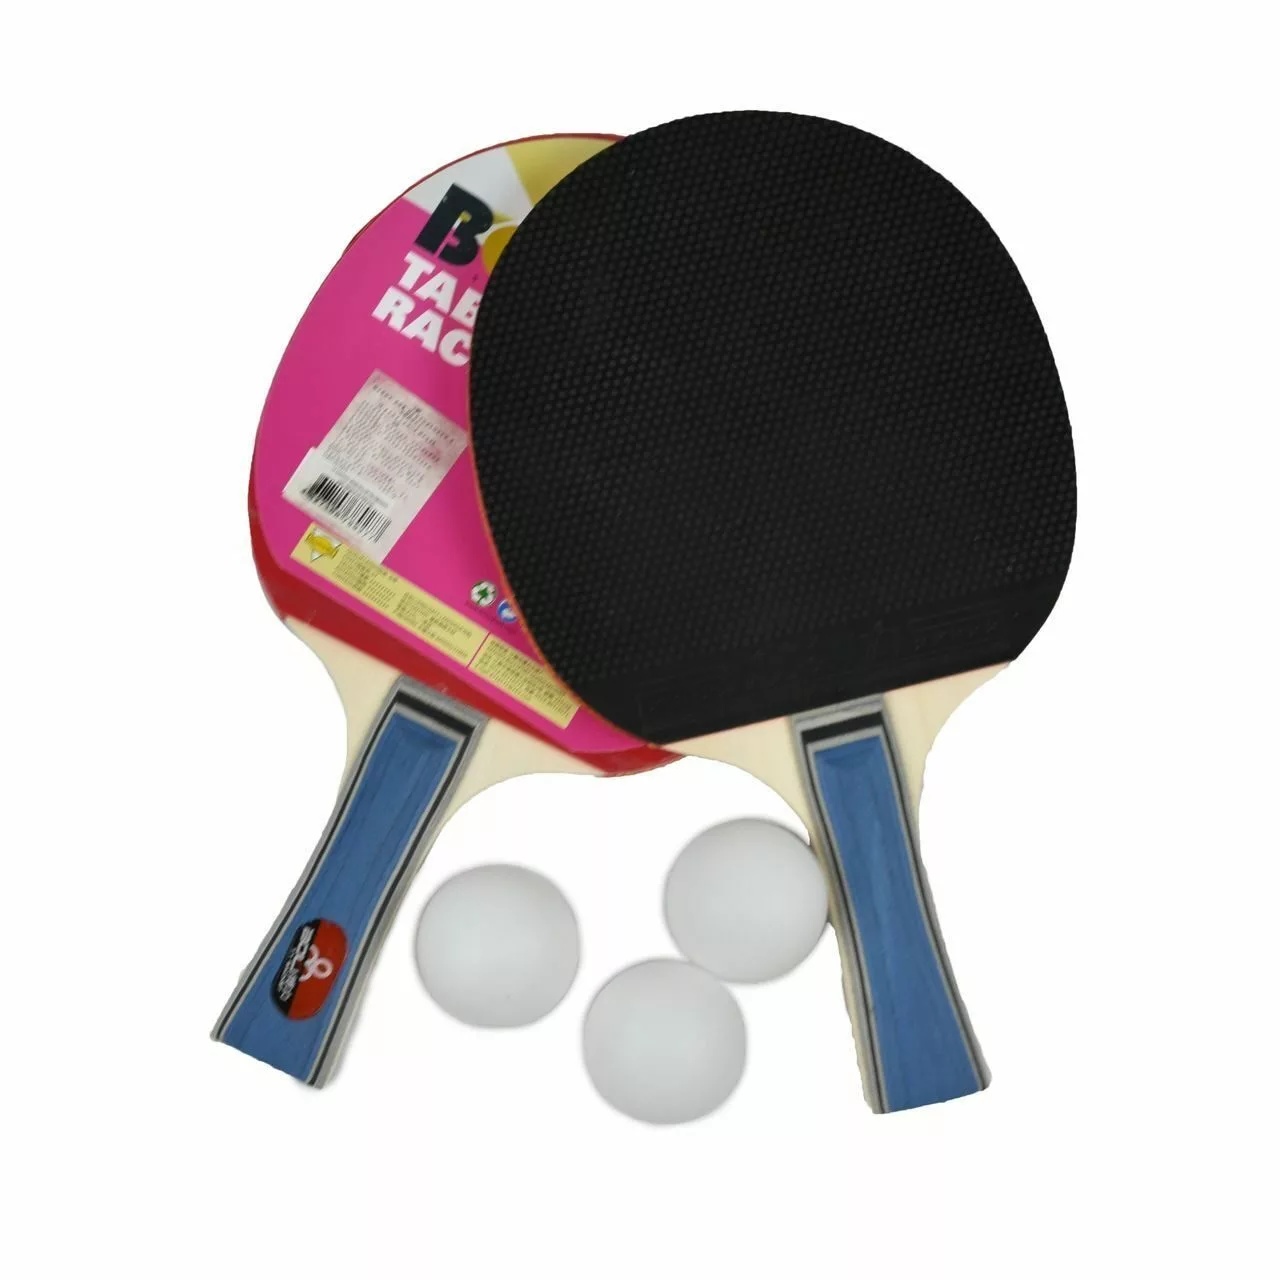 Набор для настольного тенниса BOLY Sports (2 ракетки, 3 шарика), в чехле, 905 - фото